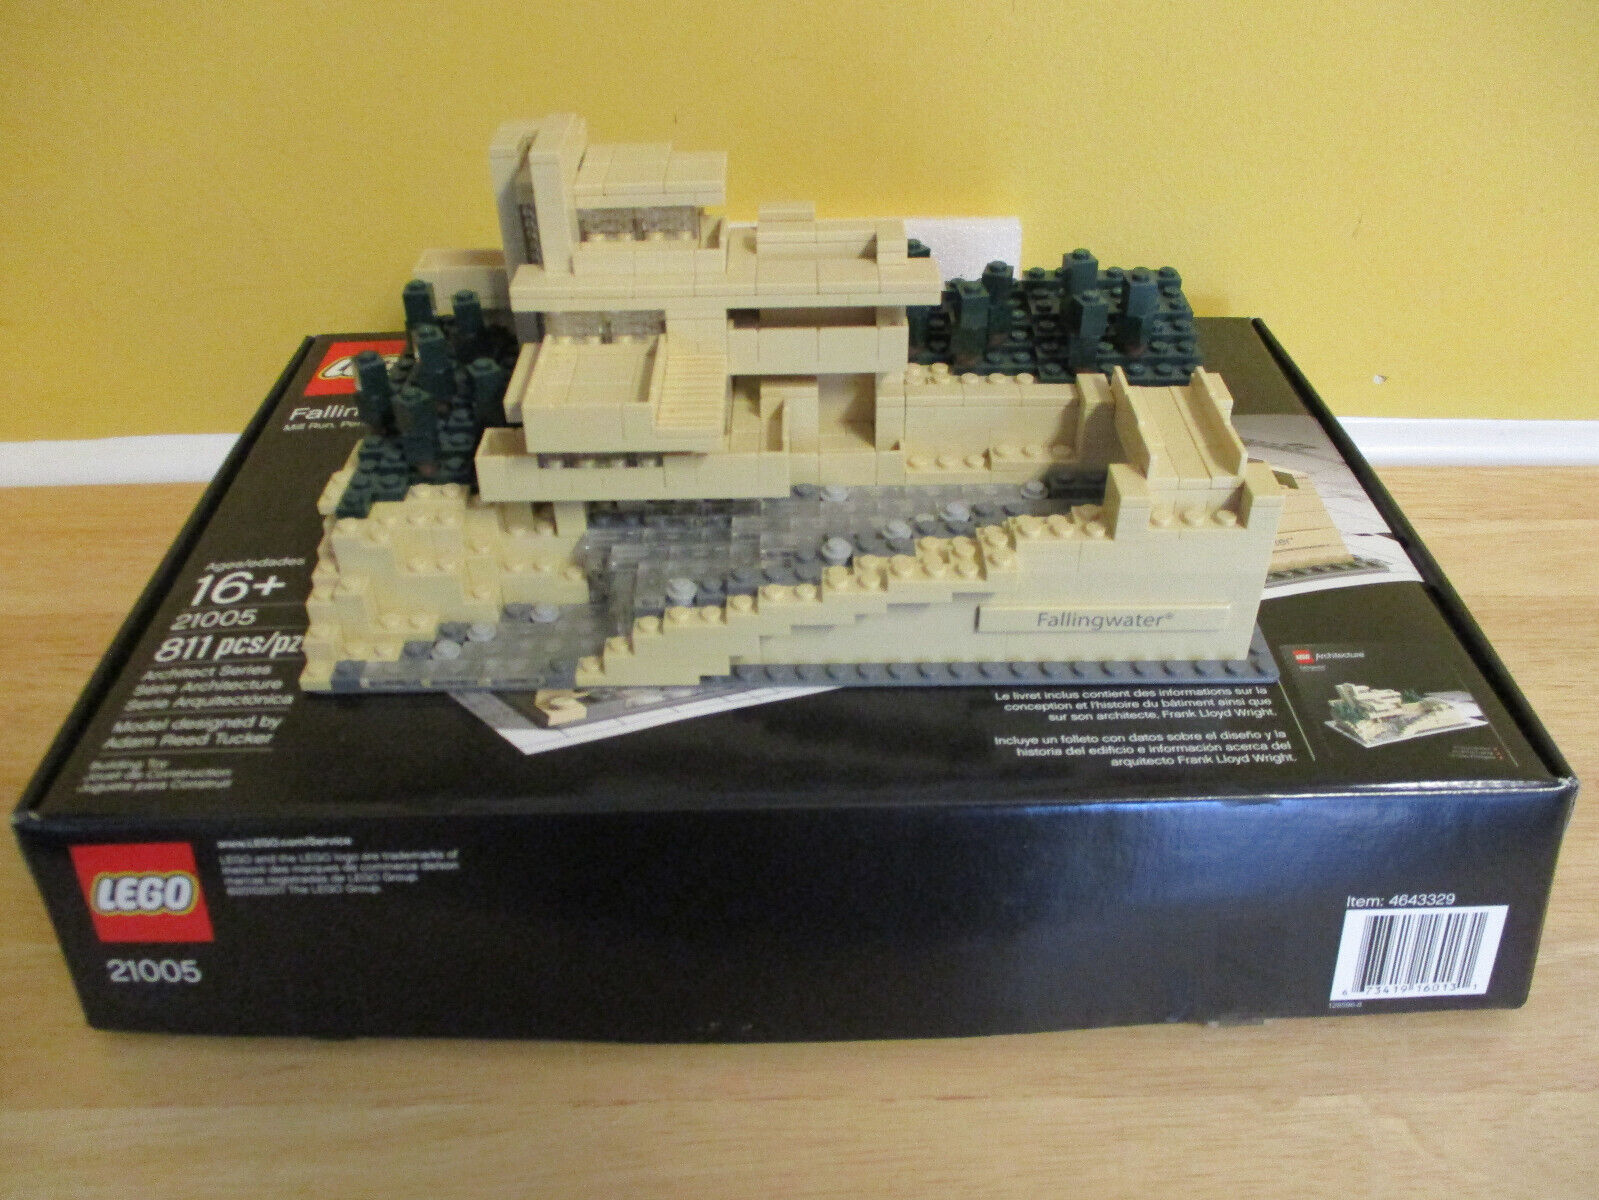 Lego 21005 Fallingwater Built Complete w/Box & Manual